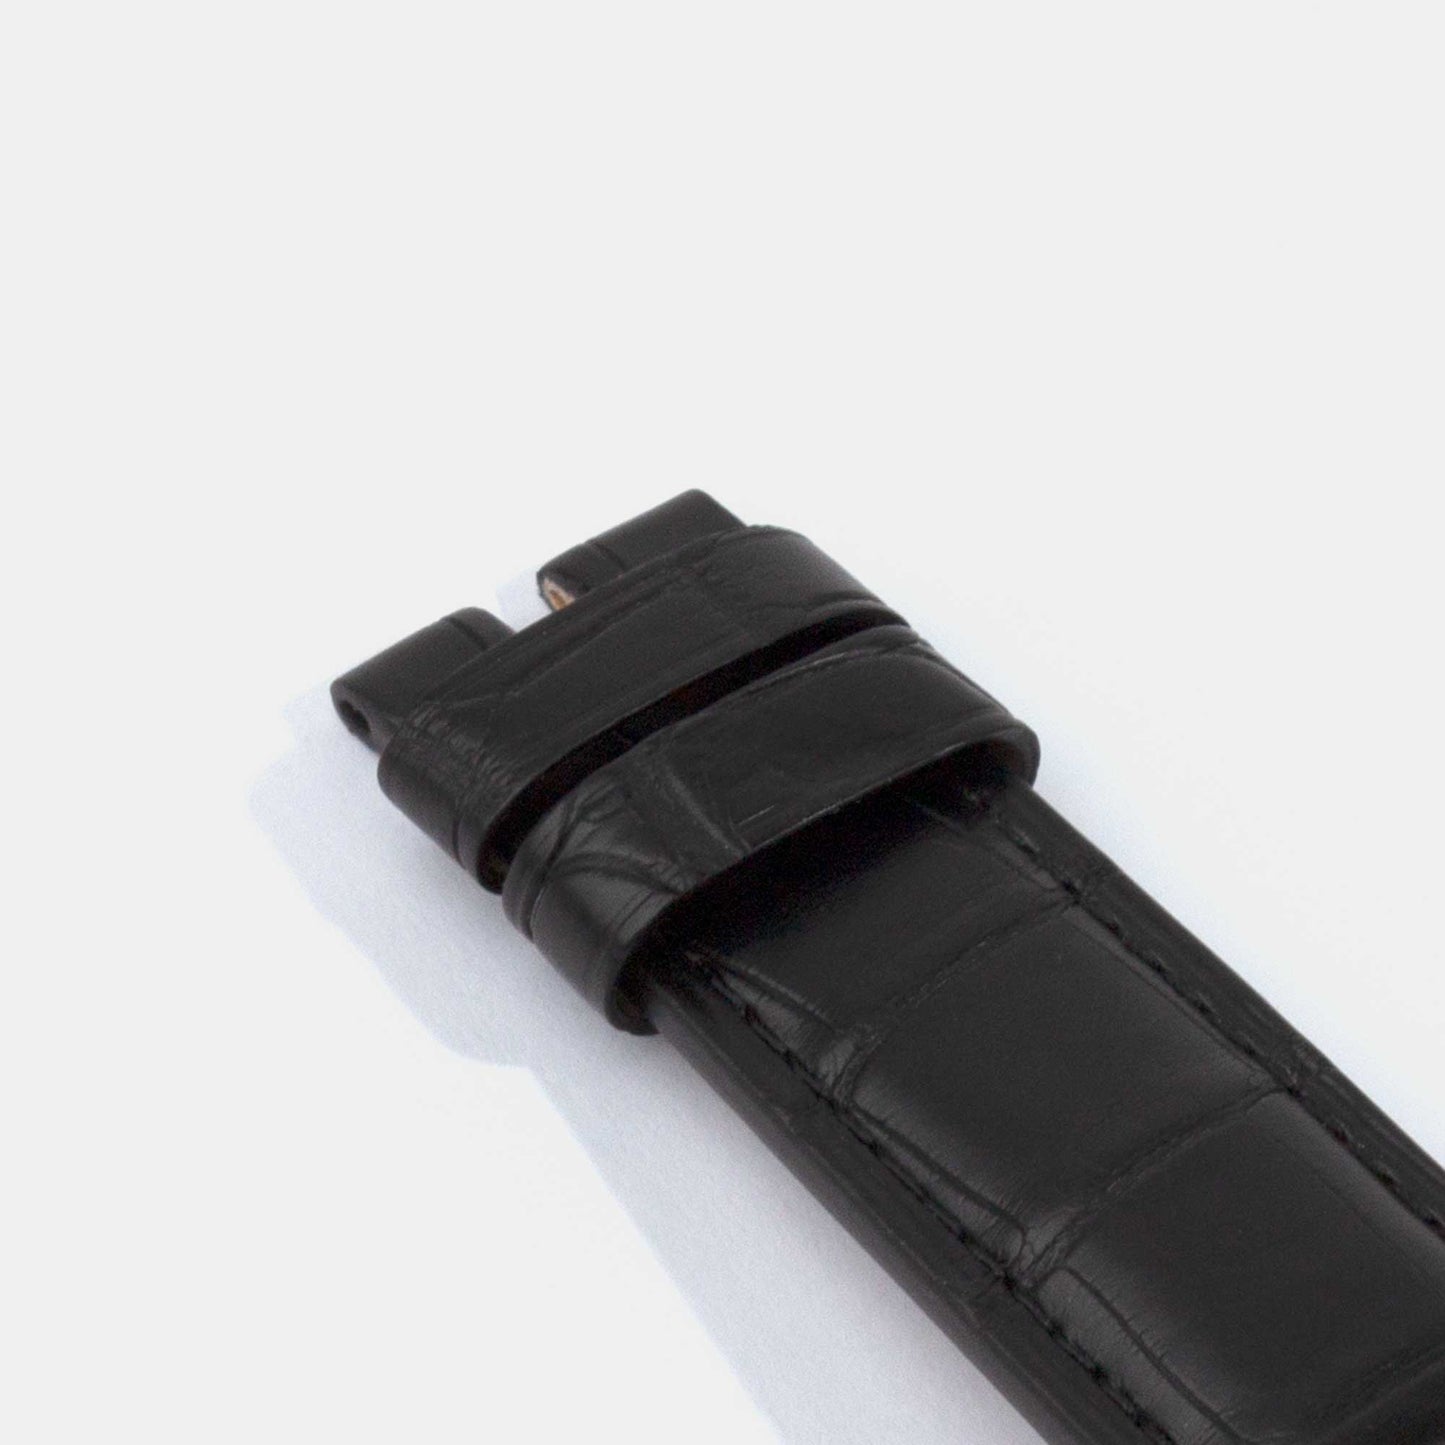 Replacement Watch Strap with Pin Buckle | Shiny Alligator | Panerai Jessenia Original